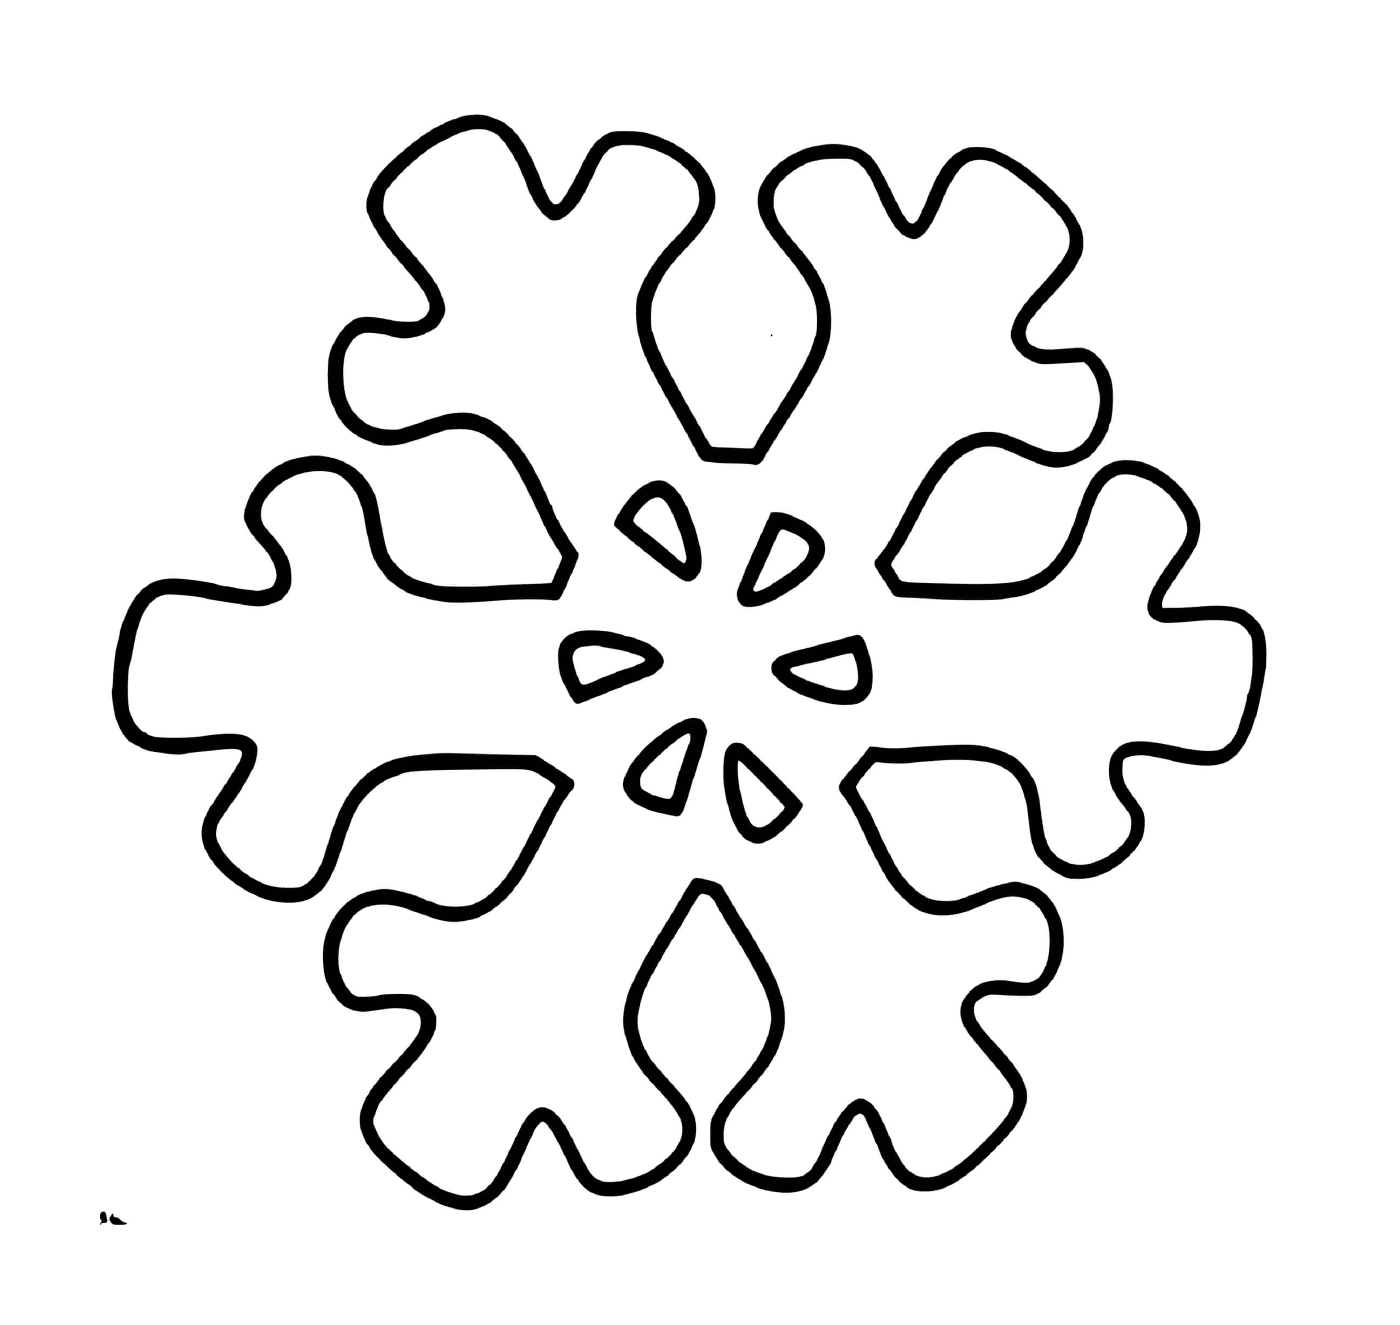  A crystalline snowflake 